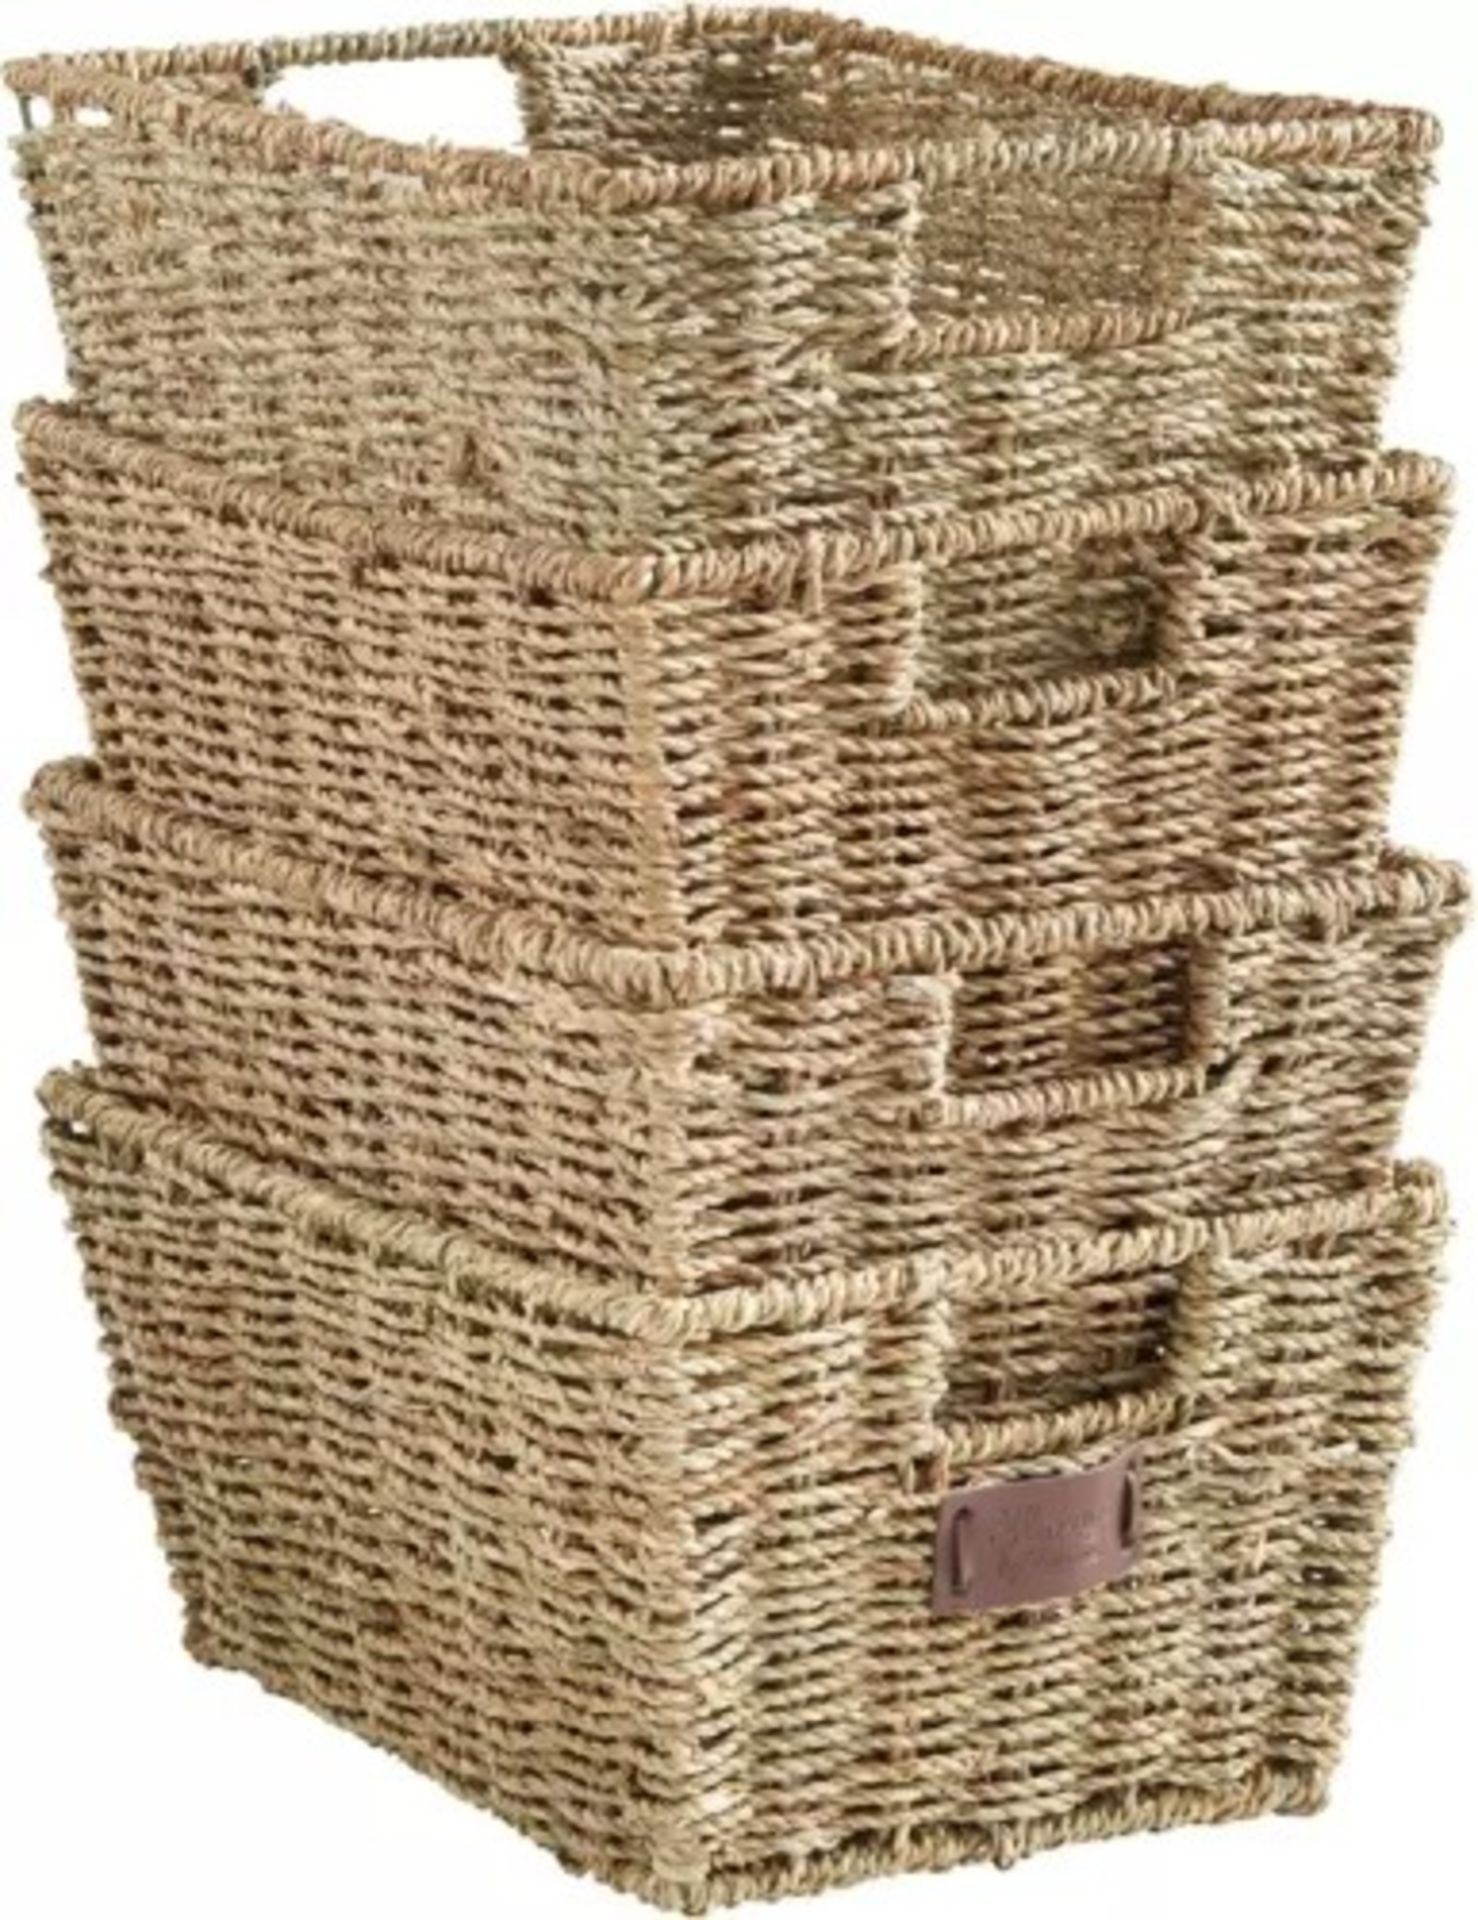 Seagrass Storage Baskets, Set of 4 - ER37